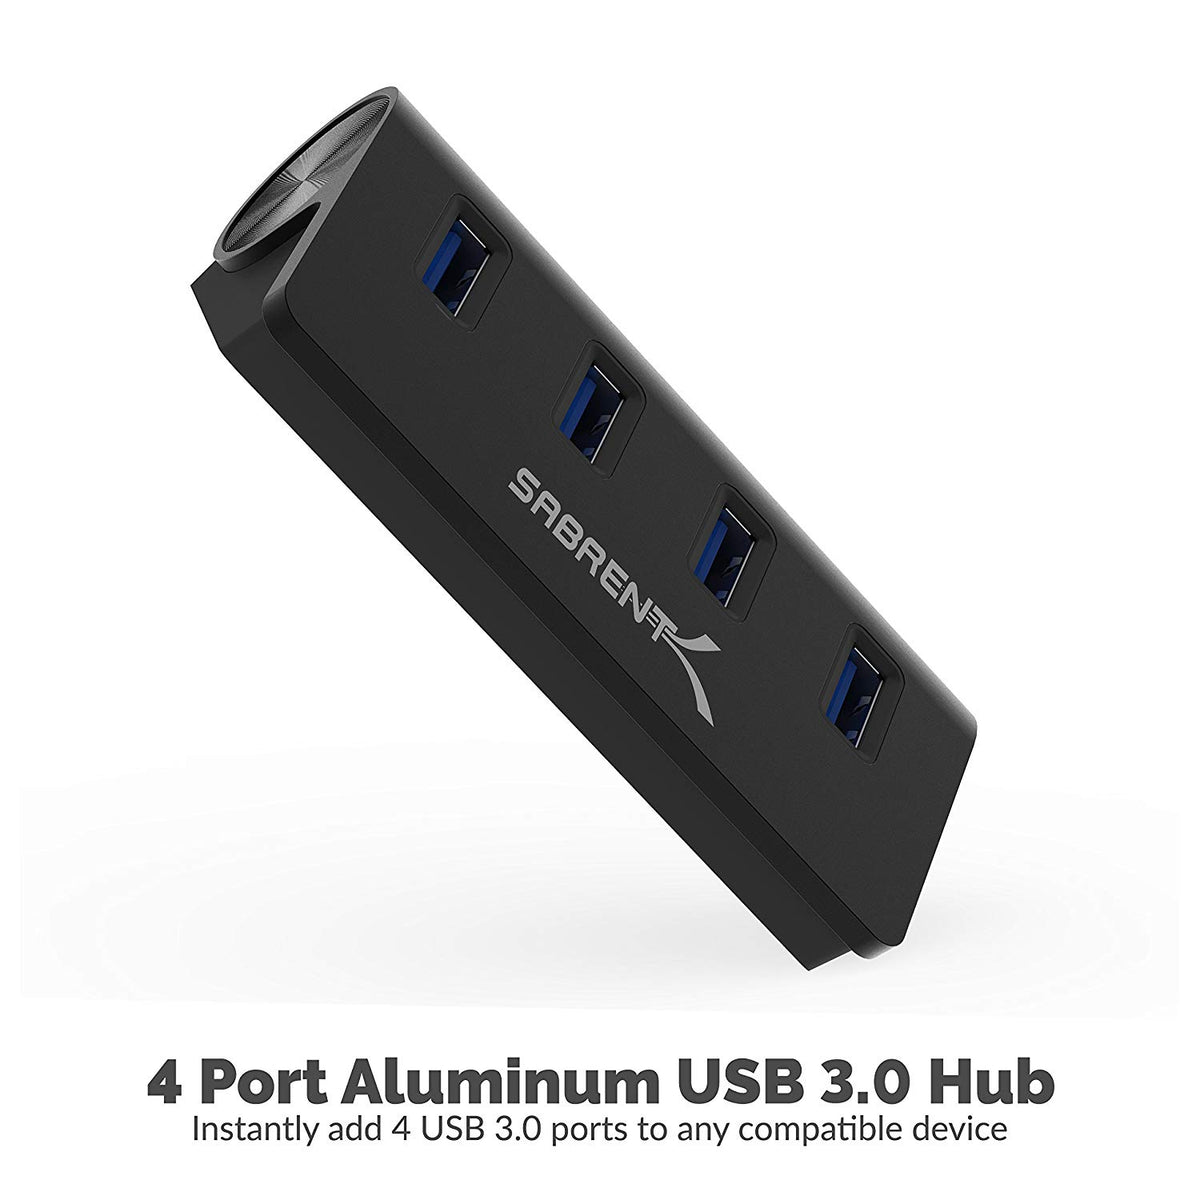 Premium 4 Port Aluminum USB 3.0 Hub (30&quot; Cable) for iMac, MacBook, MacBook Pro, MacBook Air, Mac Mini, or Any PC [Black] 5V/4A Power Adapter Included